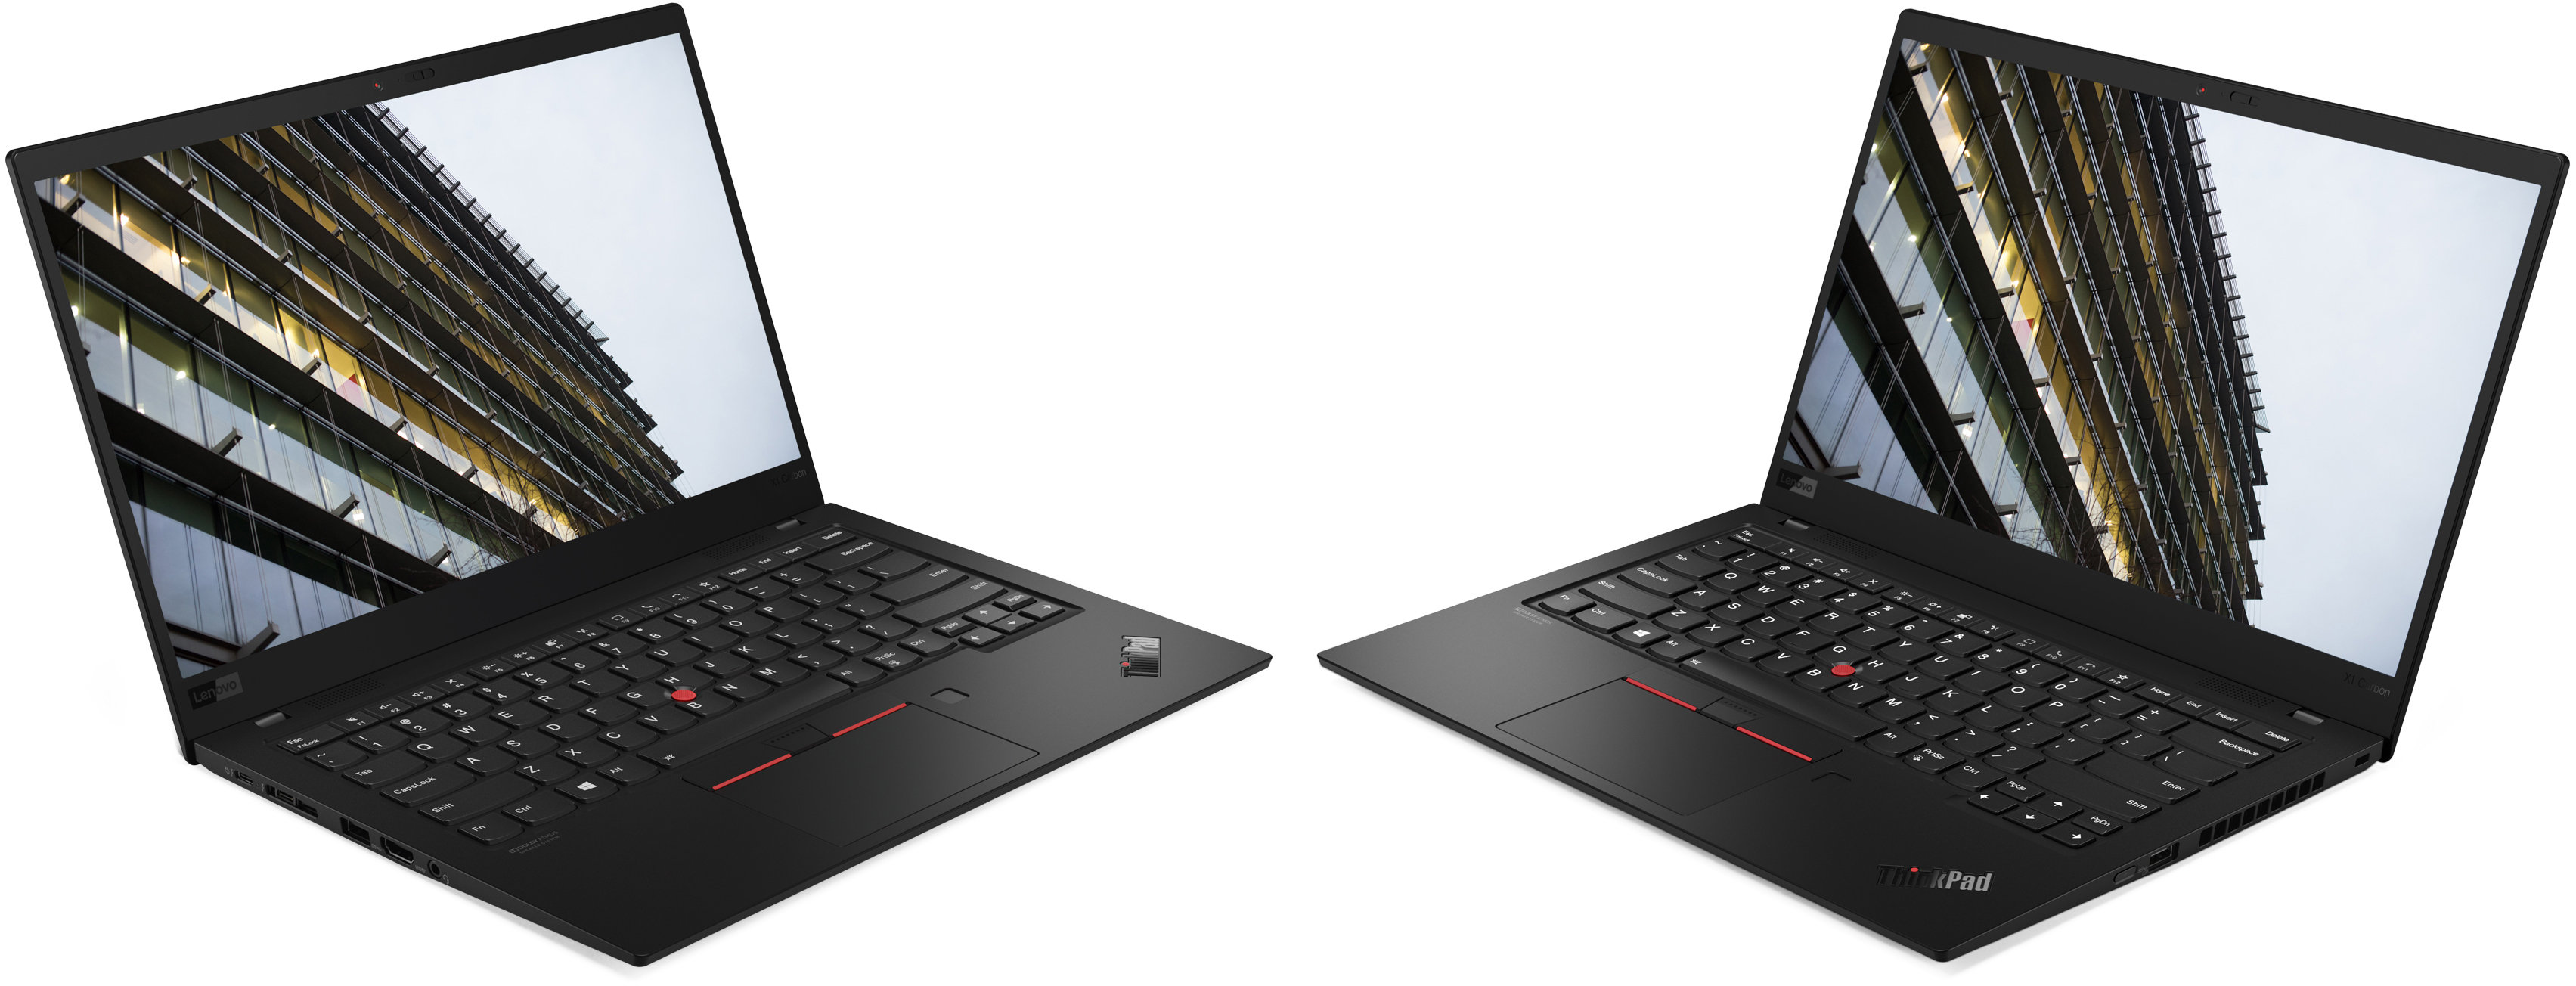 Lenovo's 2020 ThinkPad X1 Carbon & Yoga: Wi-Fi 6, New Keyboard 